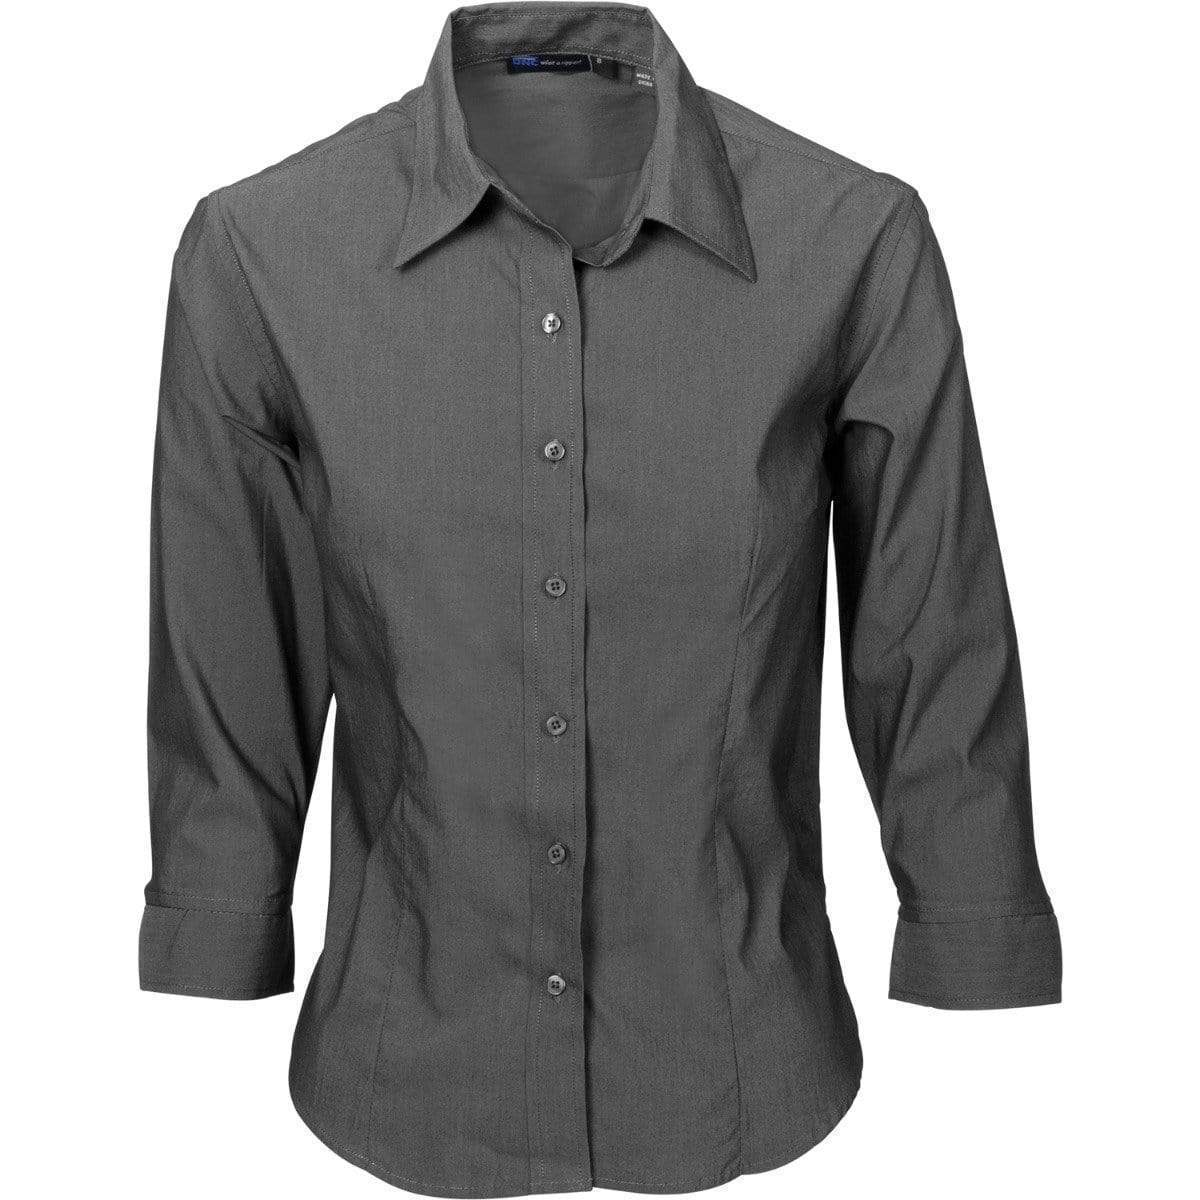 Dnc Workwear Ladies Premier Stretch Poplin 3/4 Sleeve Business Shirt - 4232 Corporate Wear DNC Workwear Slate 6 